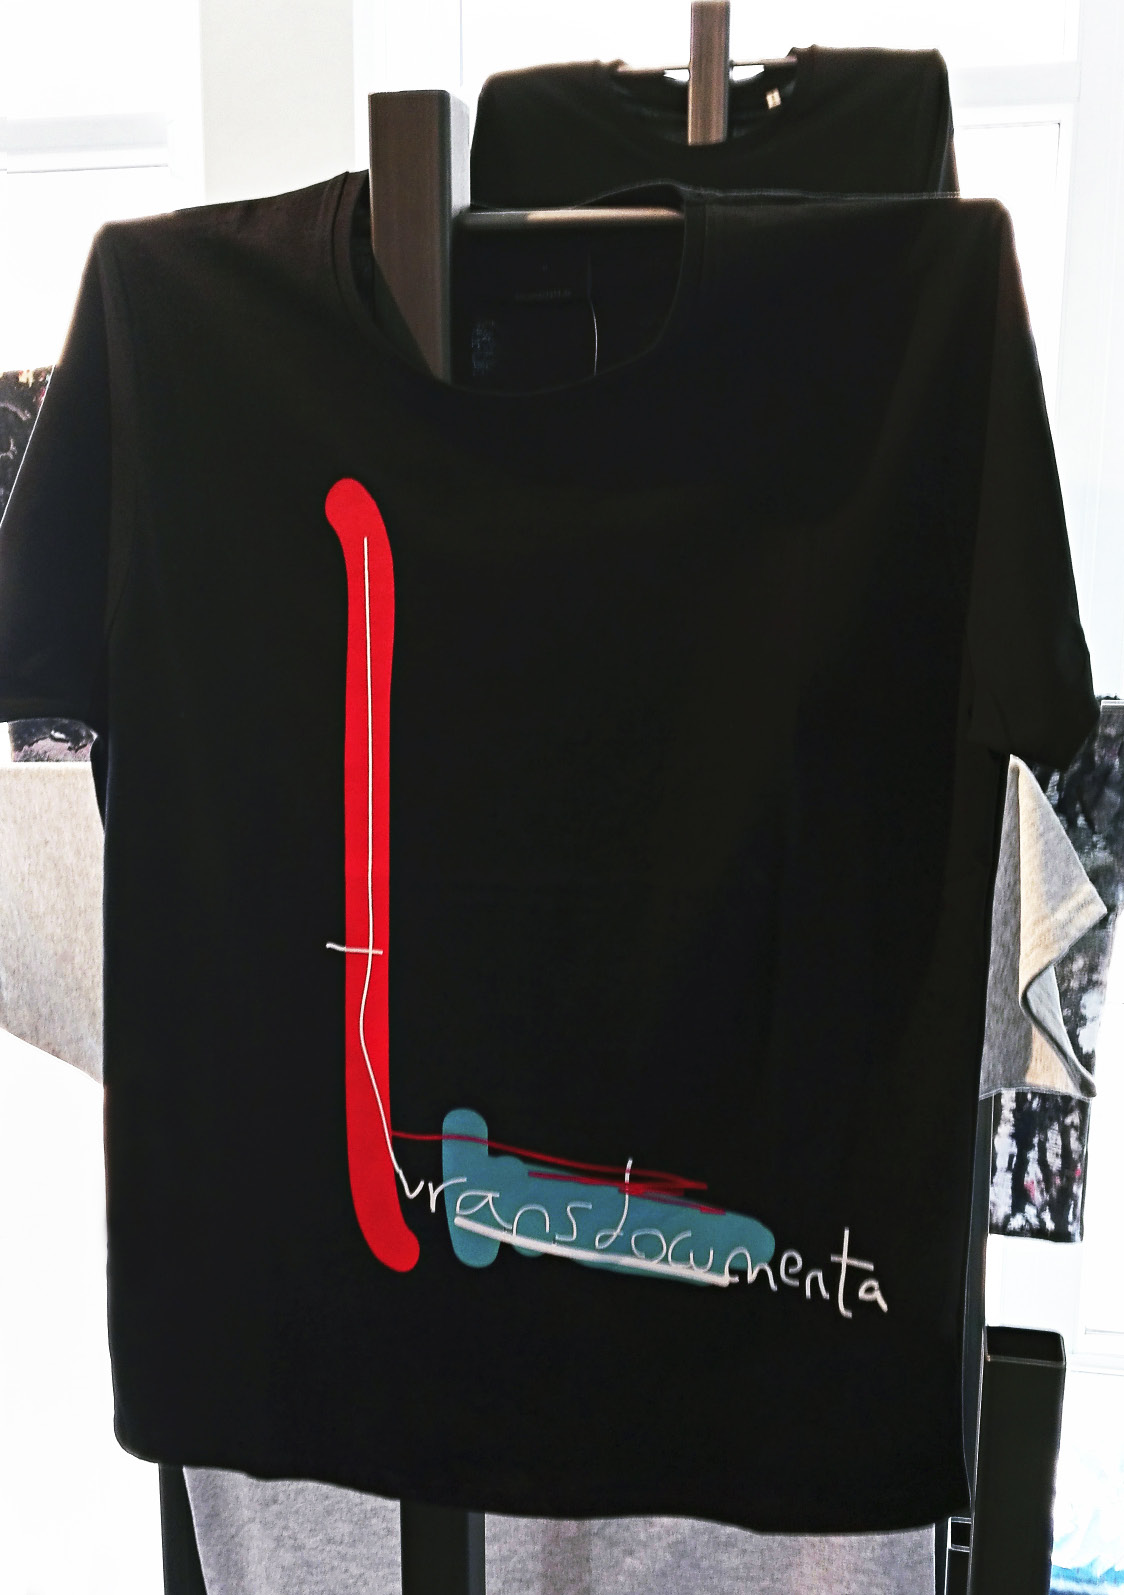 Black t-shirt with transdocumenta logo, hanging on a rack